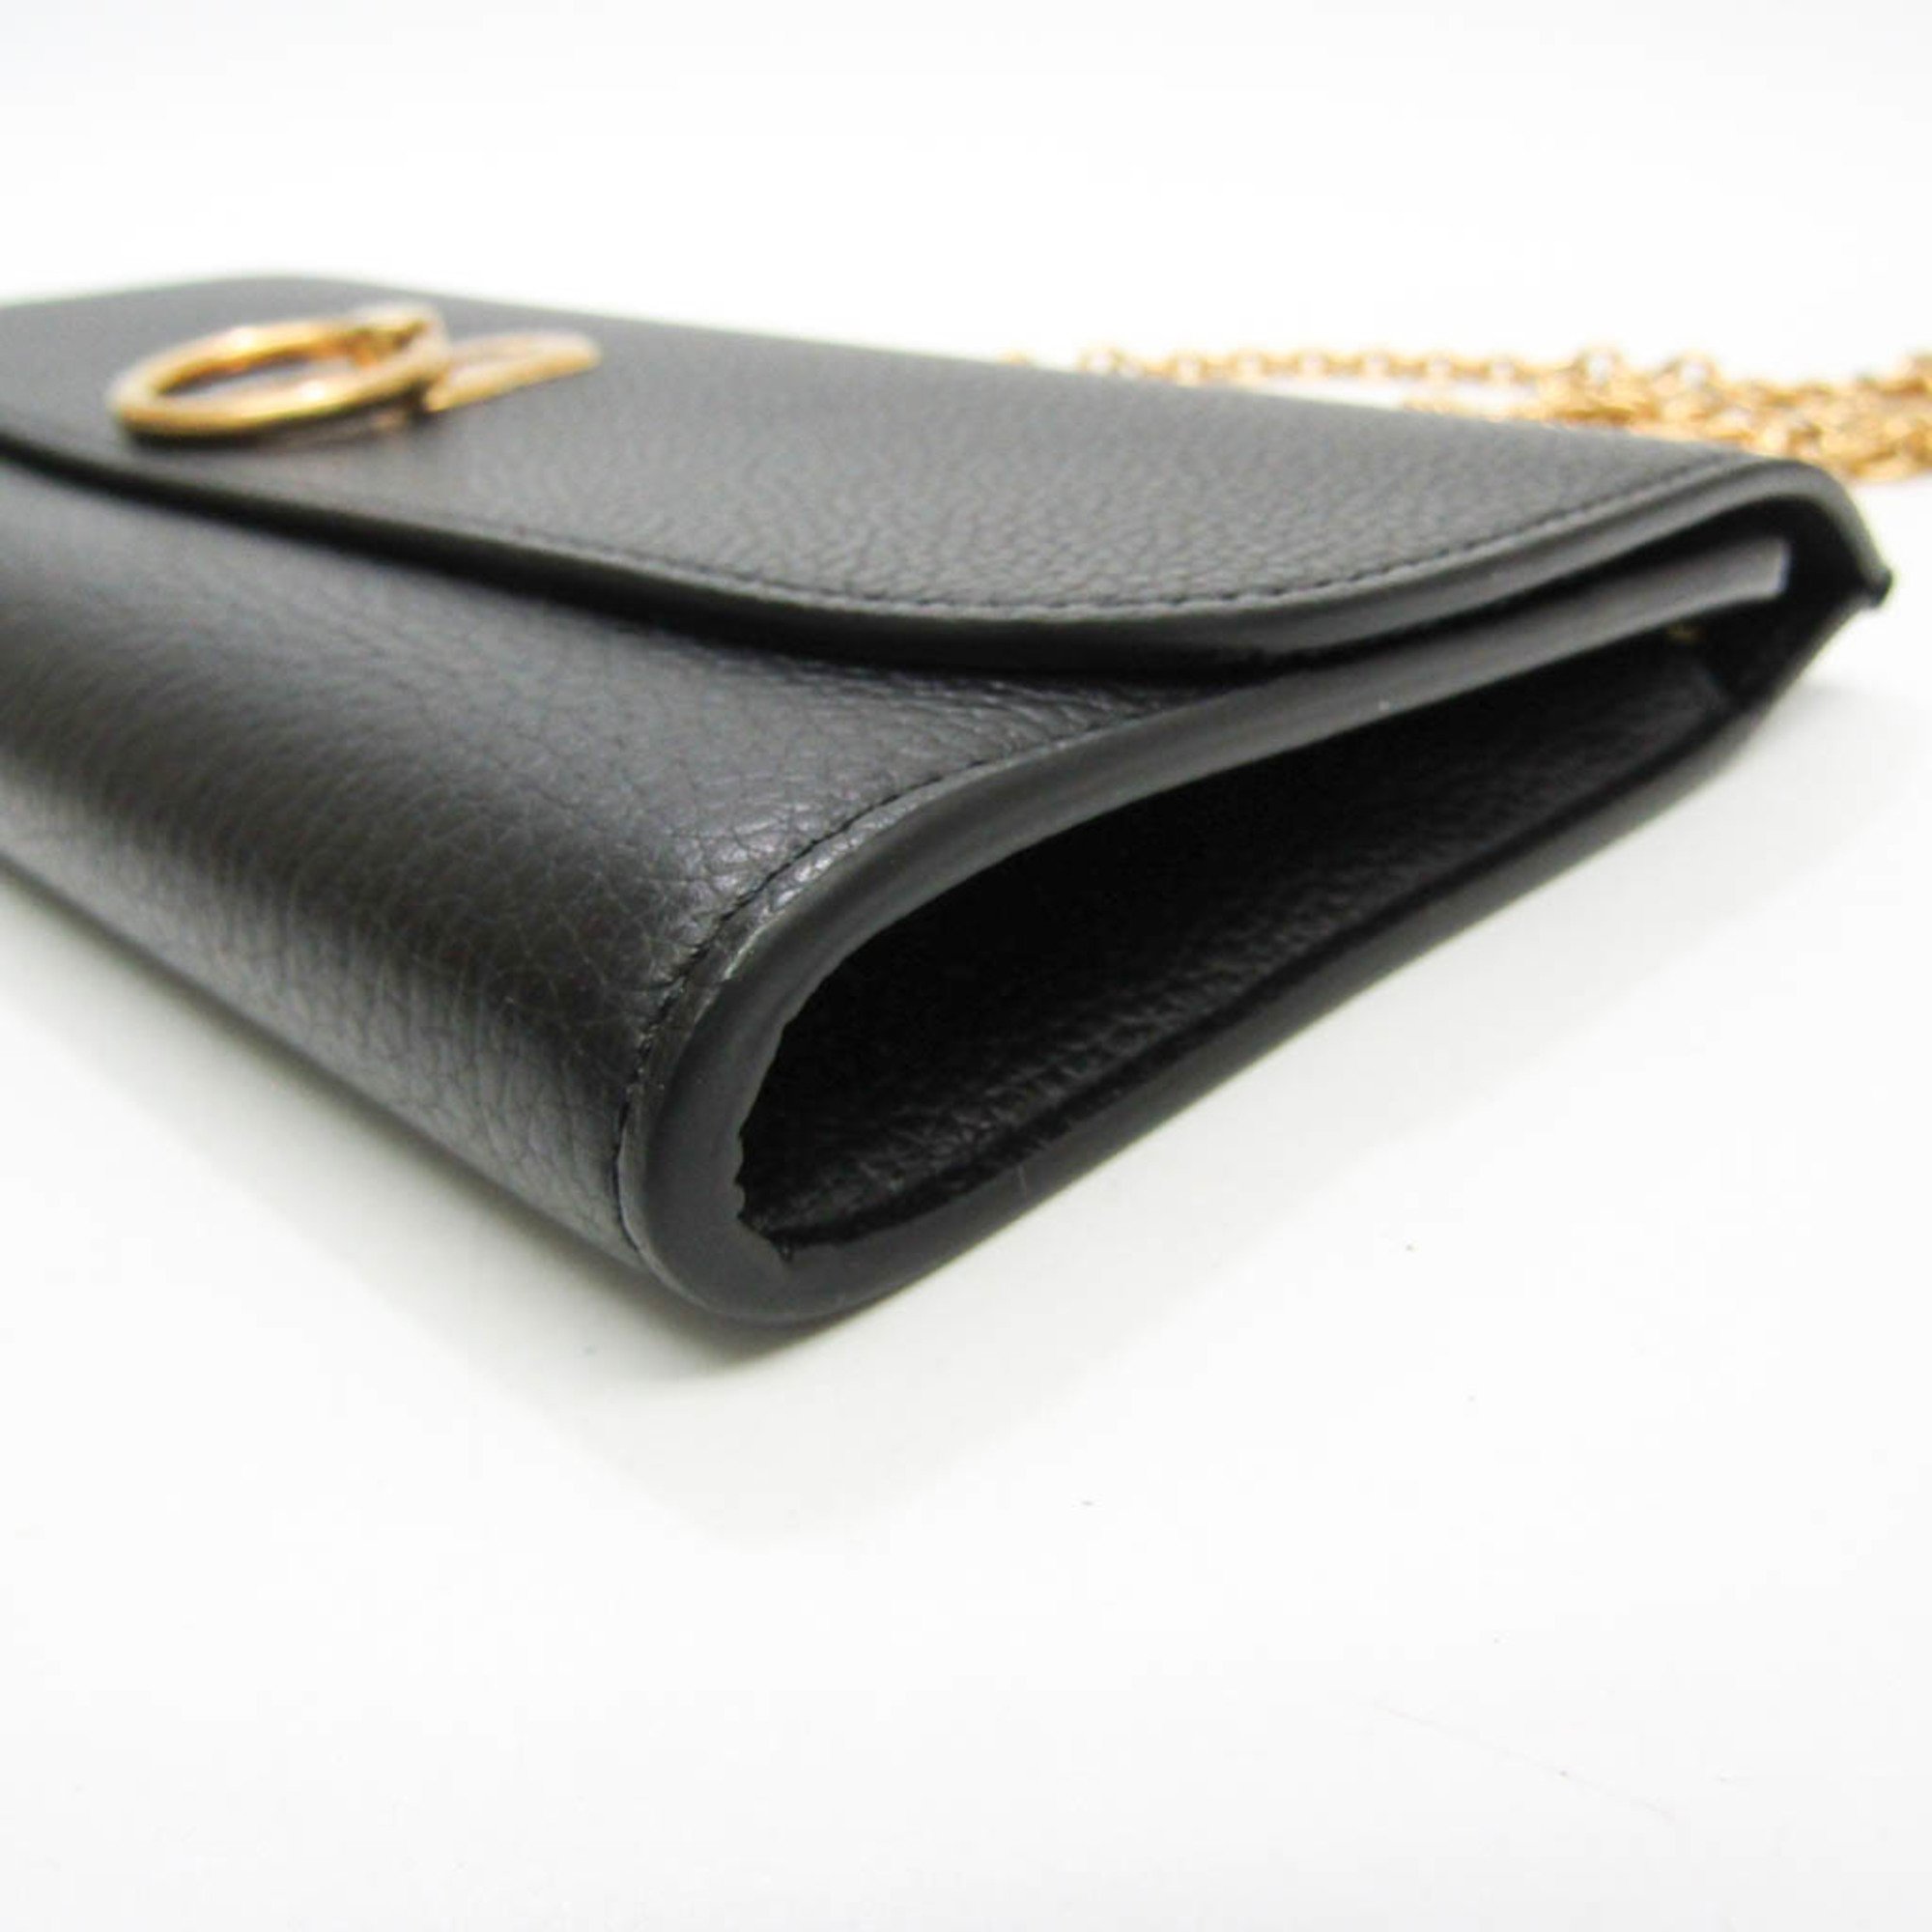 Mulberry Amberley Clutch RL6090 Women's Leather Clutch Bag,Shoulder Bag Black